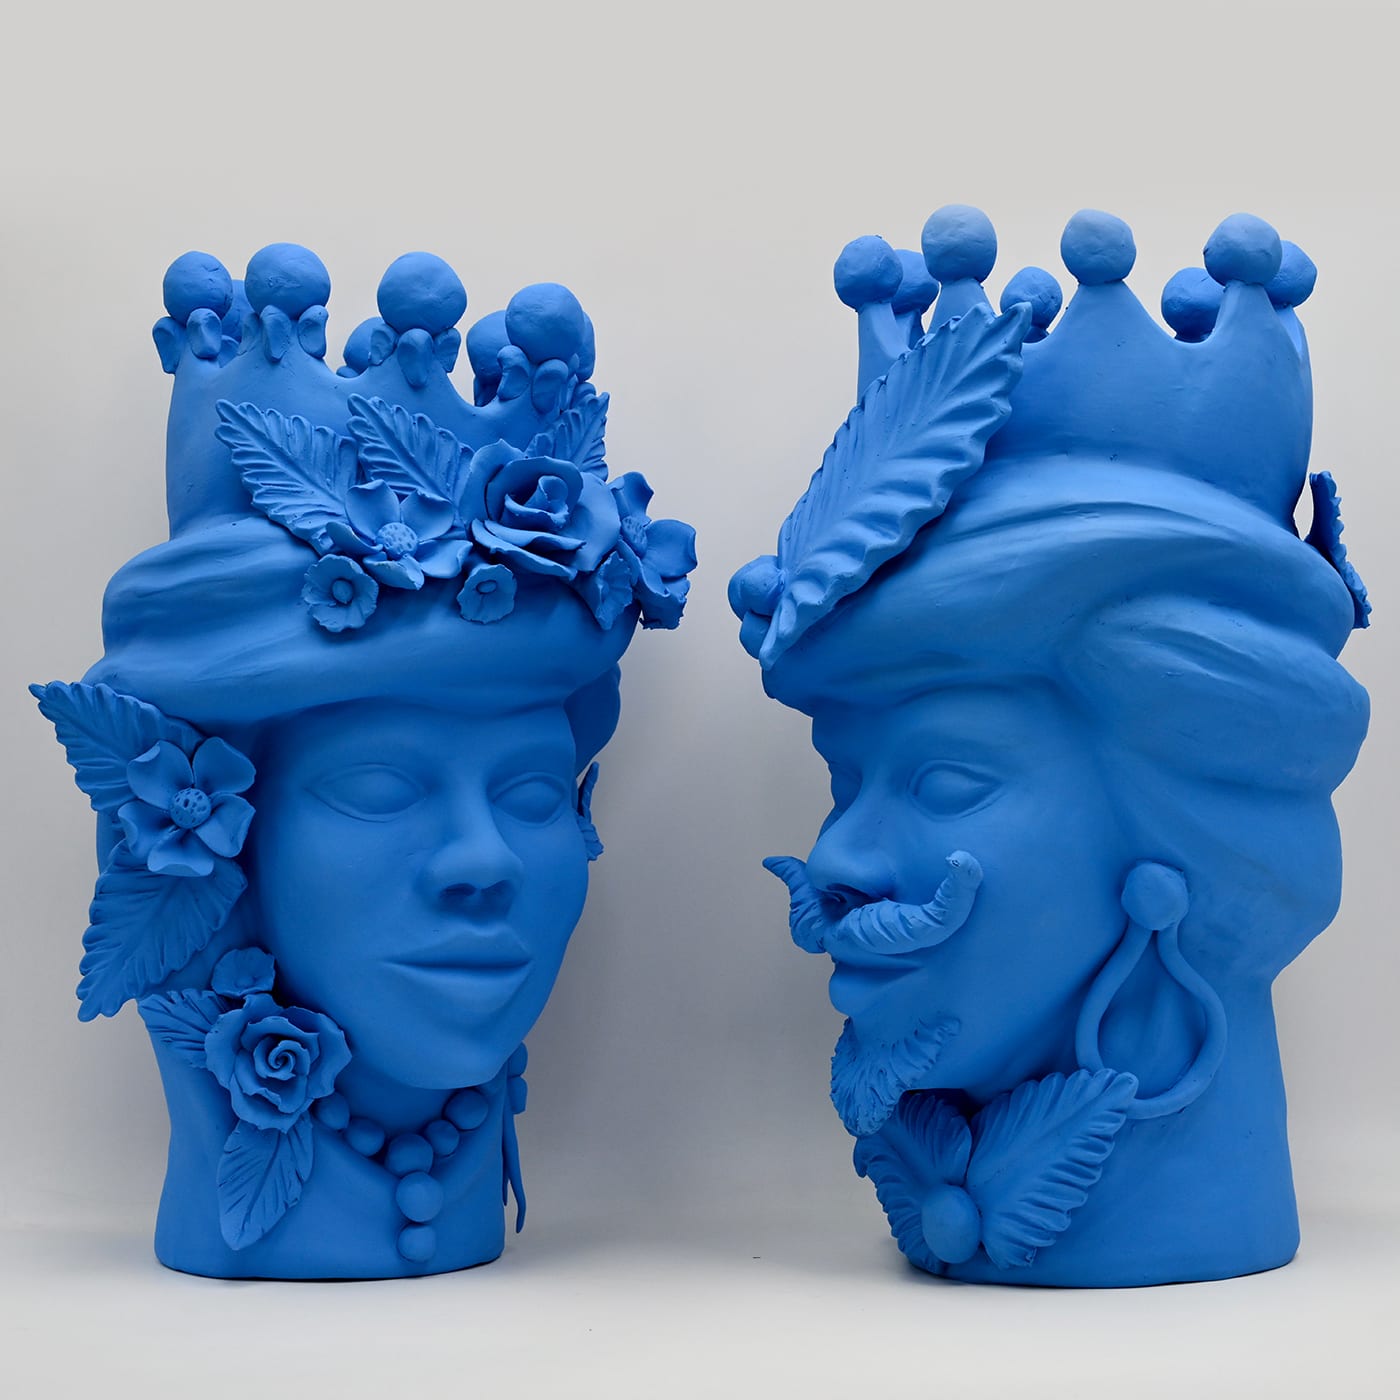 Artisan Blue Moor's Head Sculpture Made in Italy